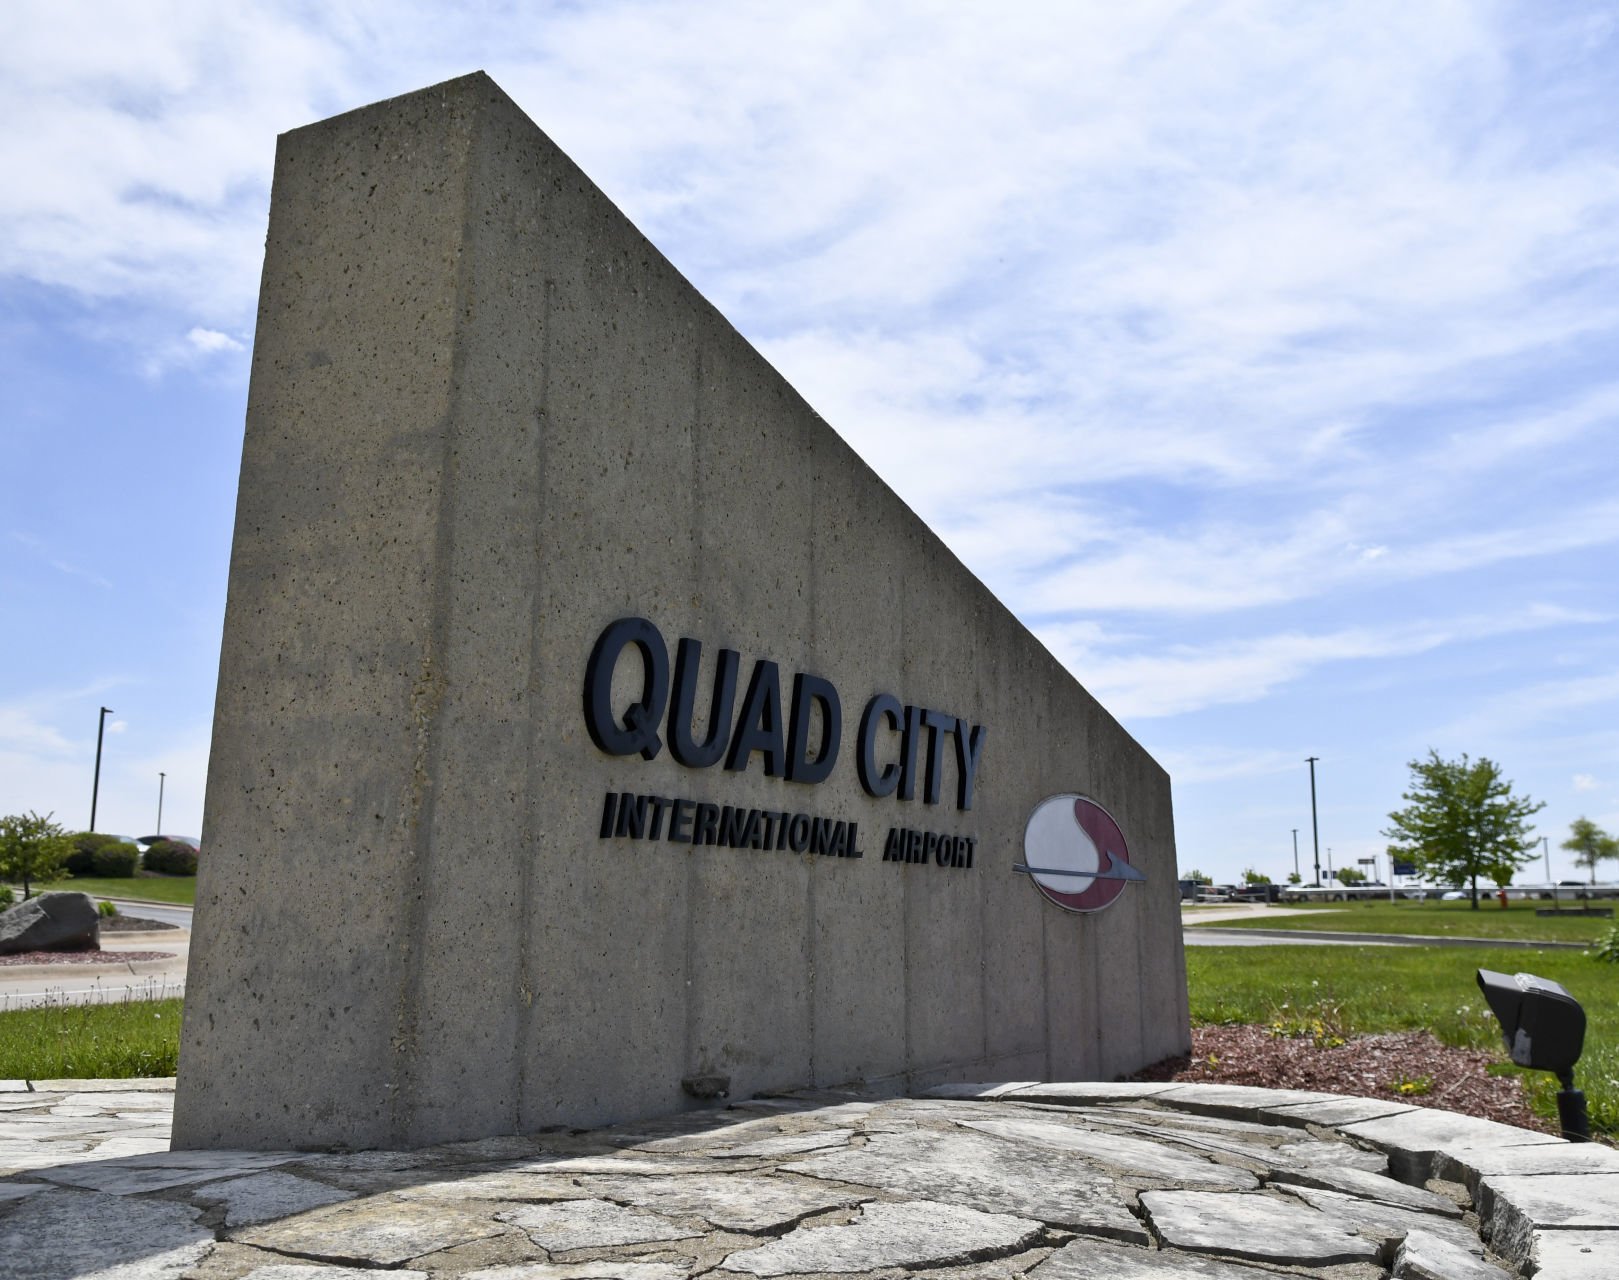 quad city airport public safety